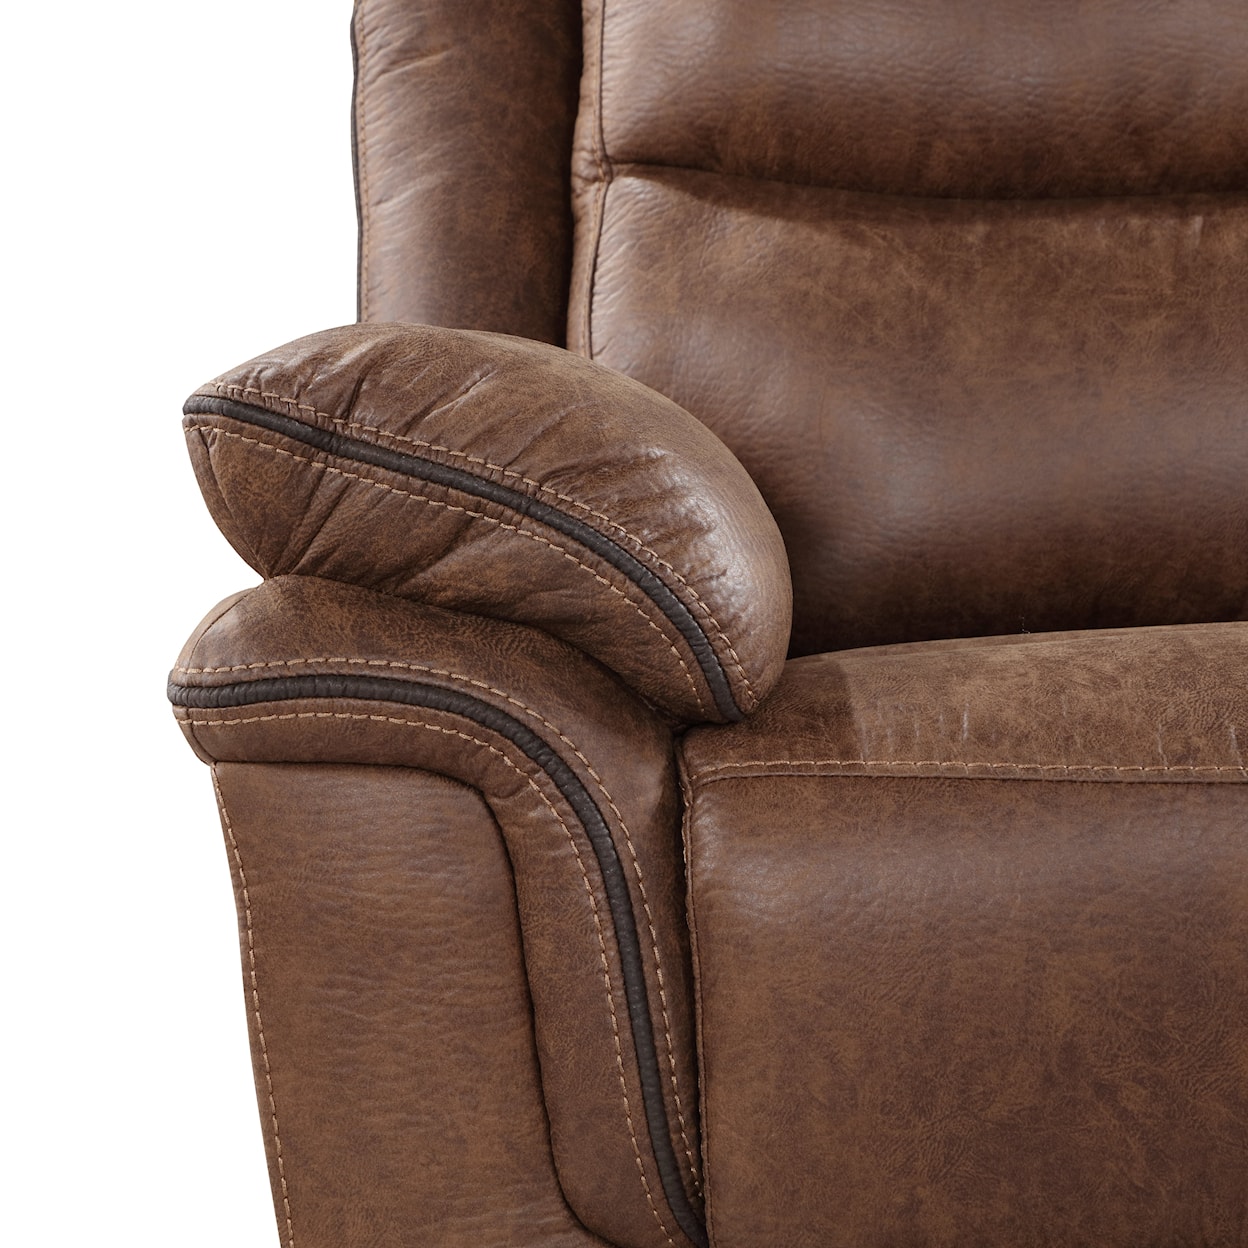 New Classic Ryland Reclining Sofa